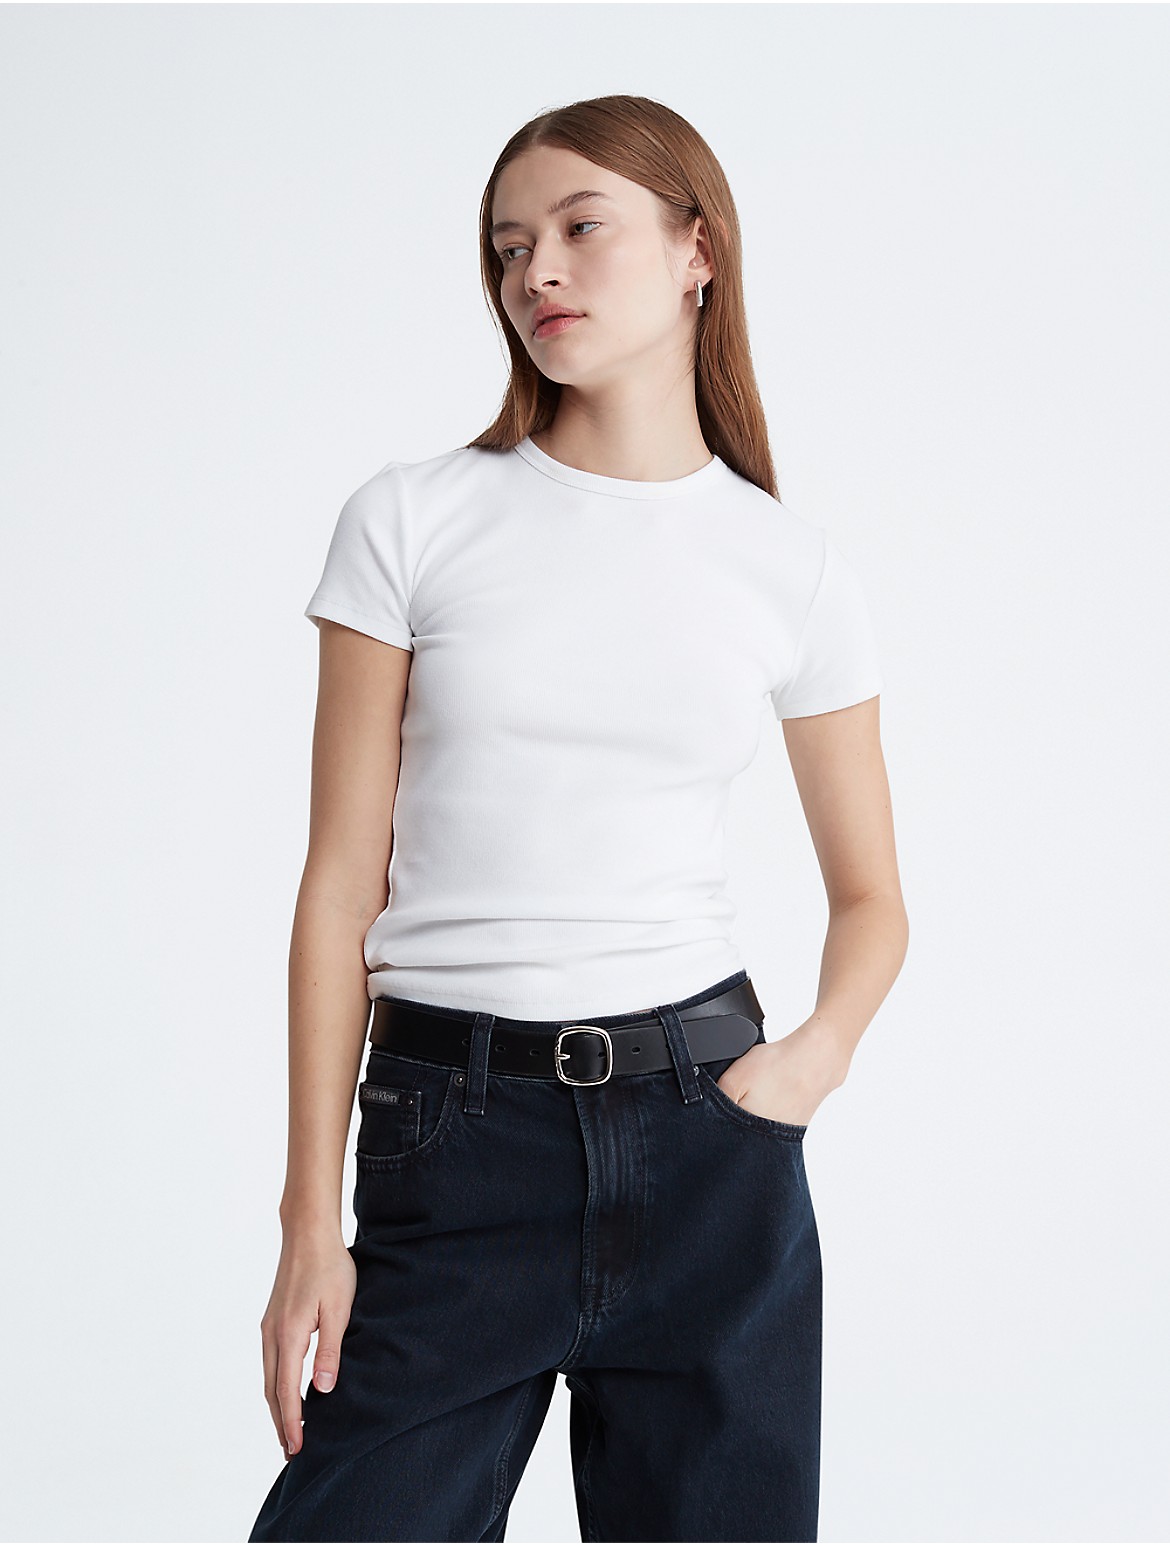 Calvin Klein Women's Contour Rib Slim Fit T-Shirt - White - XS